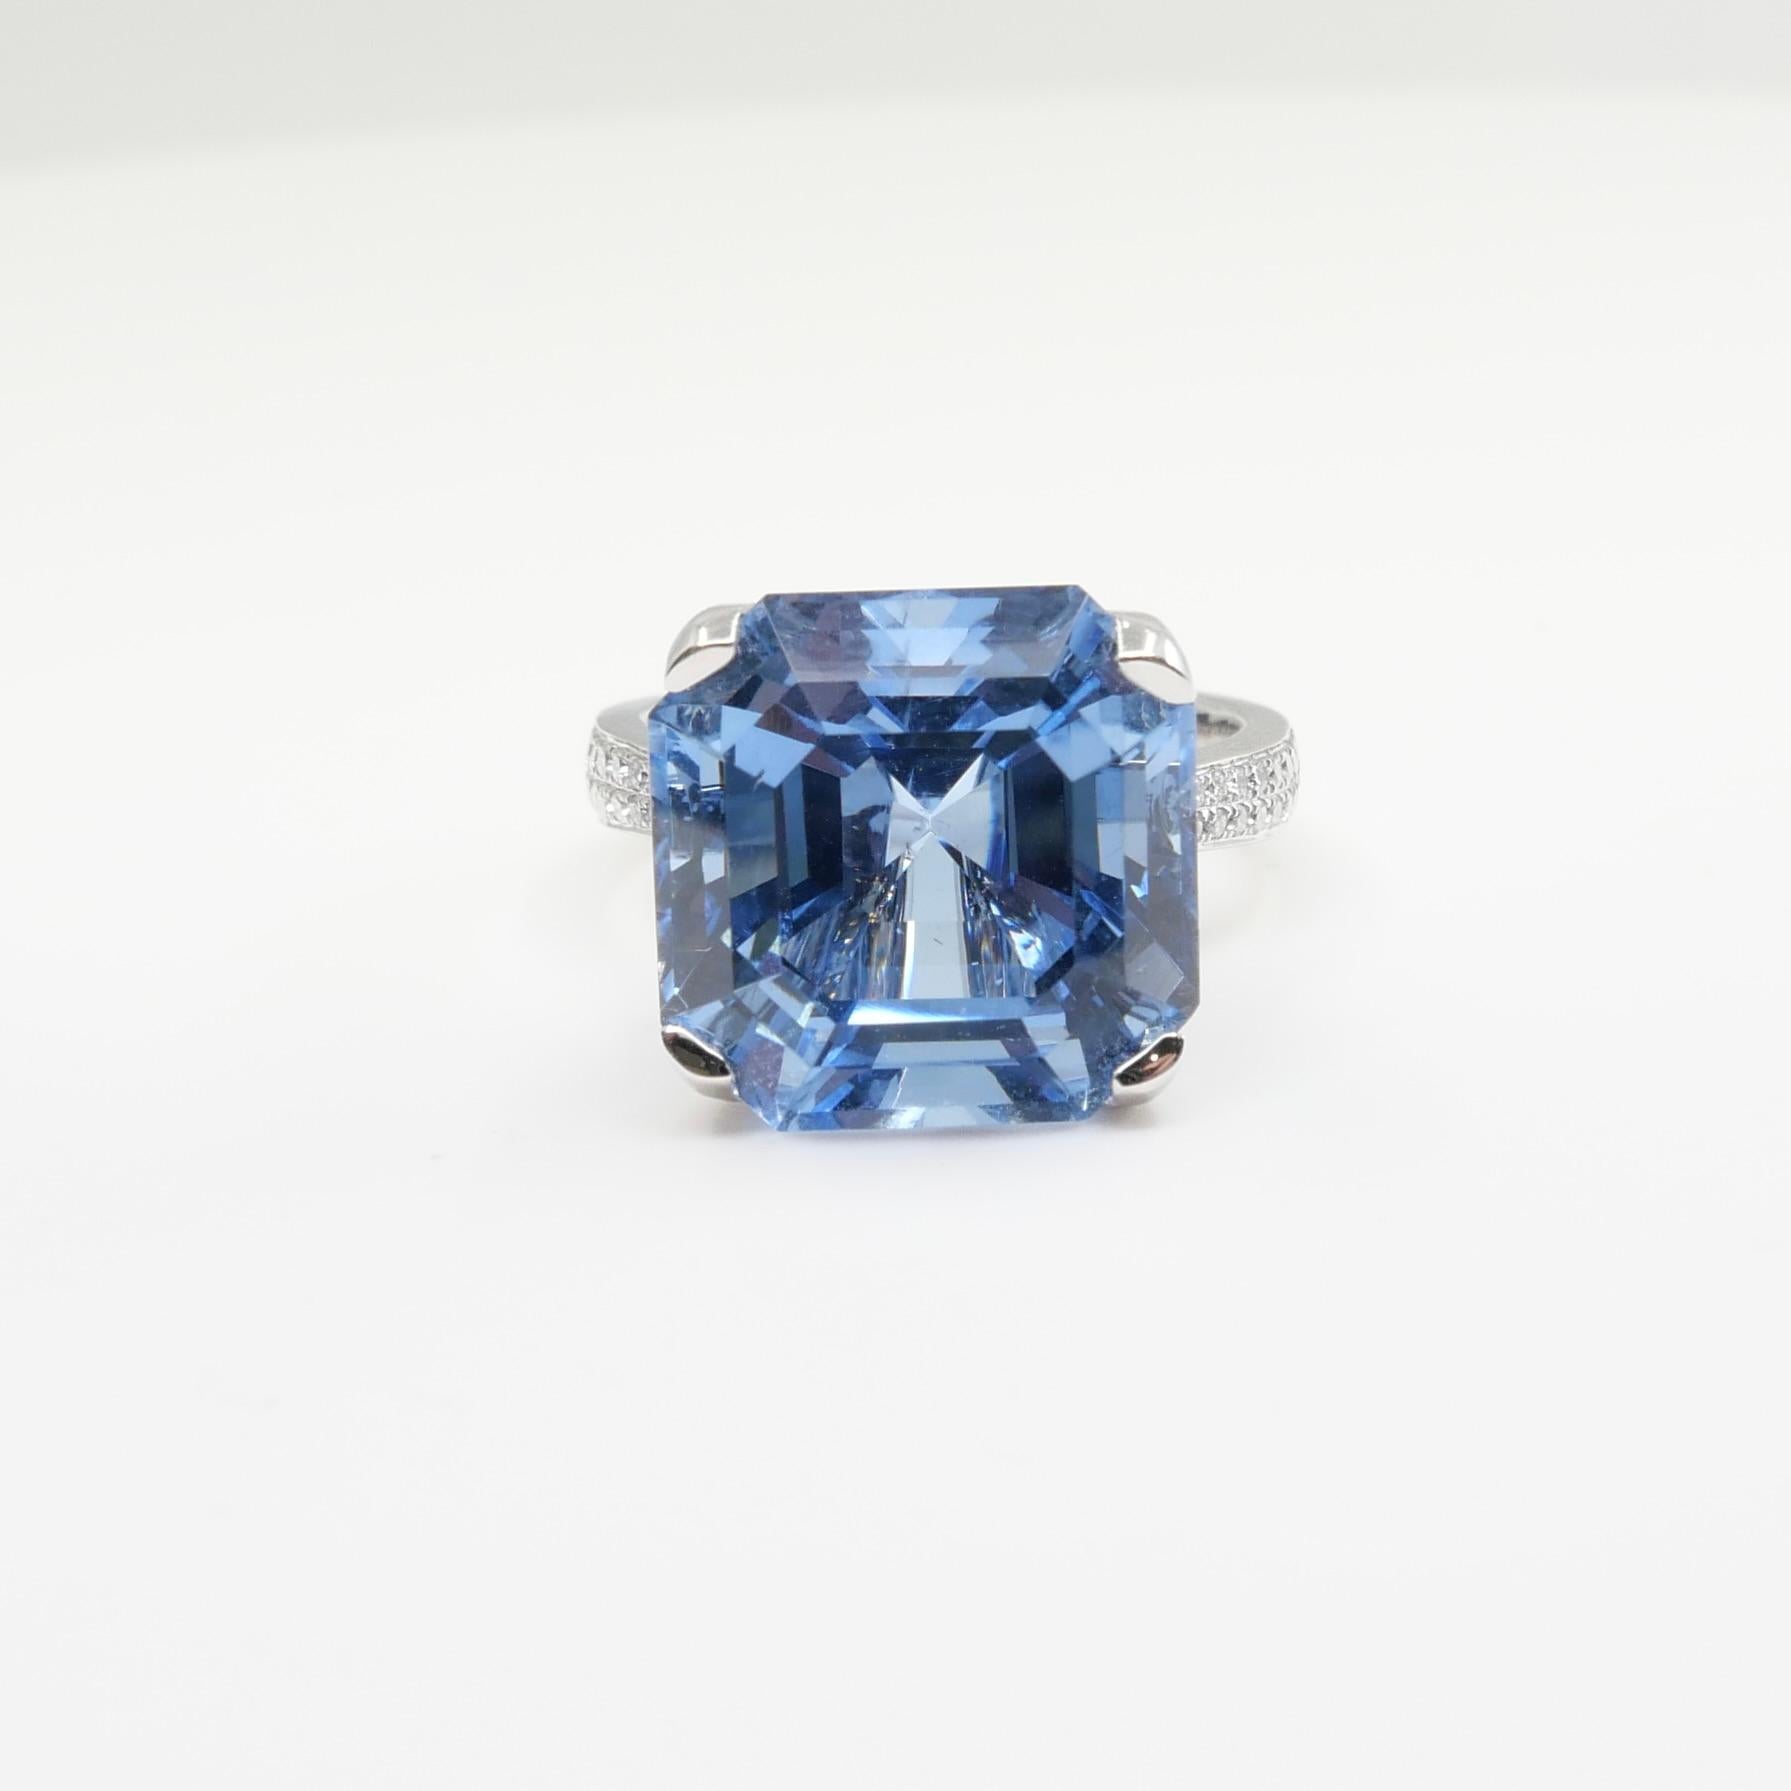 Certified 11.23 Cts Asscher Cut Aquamarine Diamond Ring, True Santa Maria Color 3